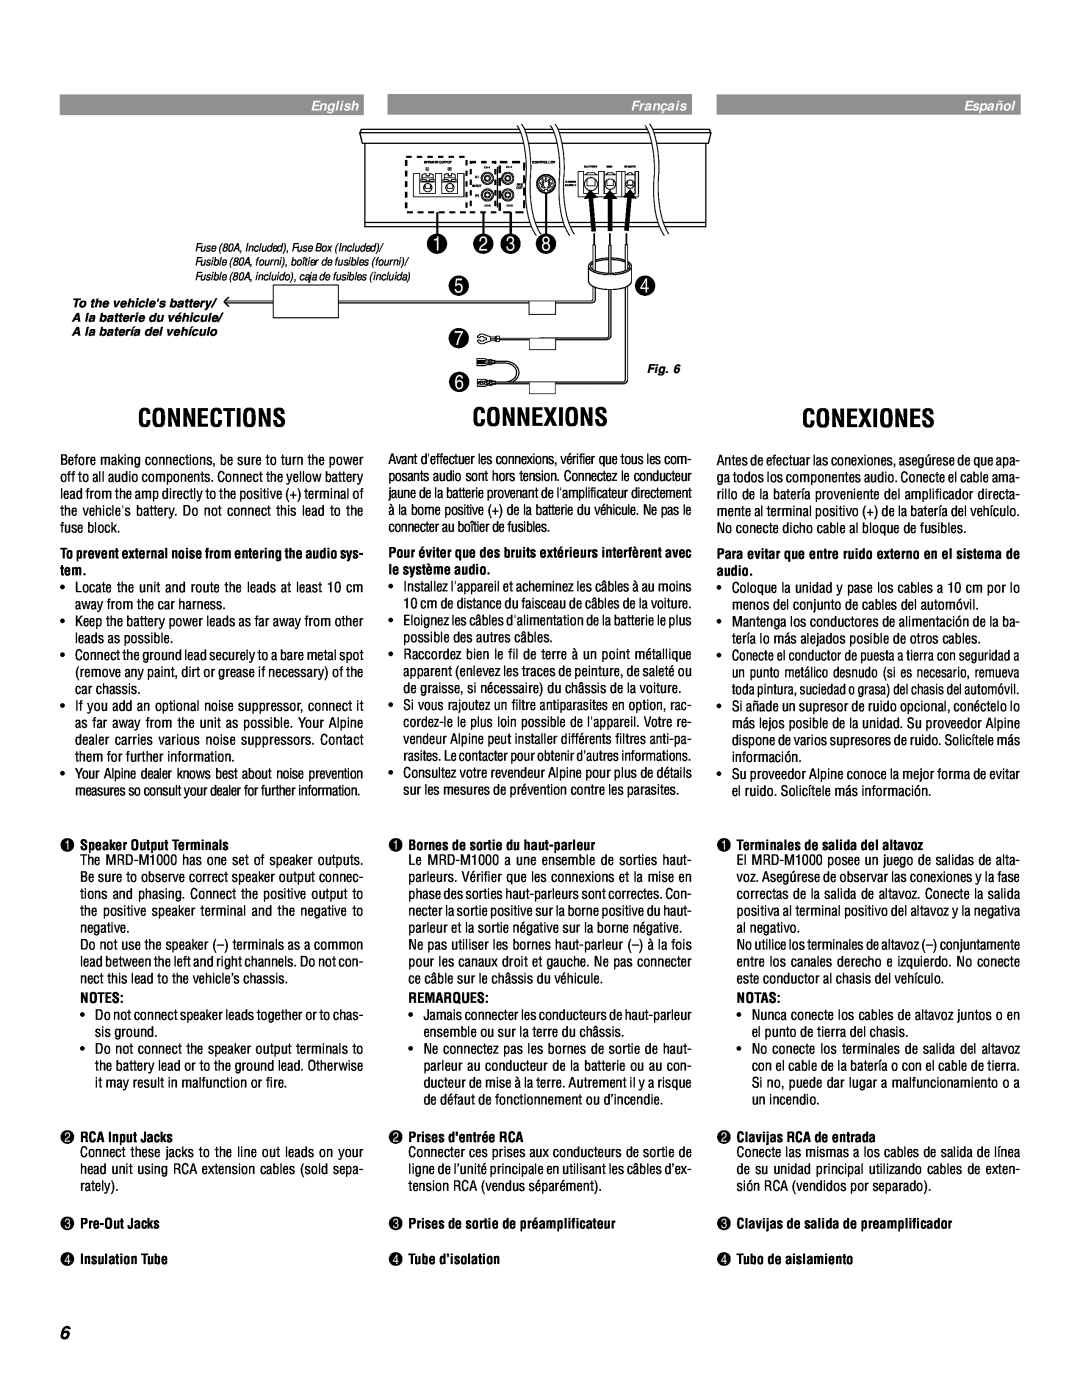 Alpine MRD-M1000 owner manual Connections, Conexiones, Connexions, Fig 